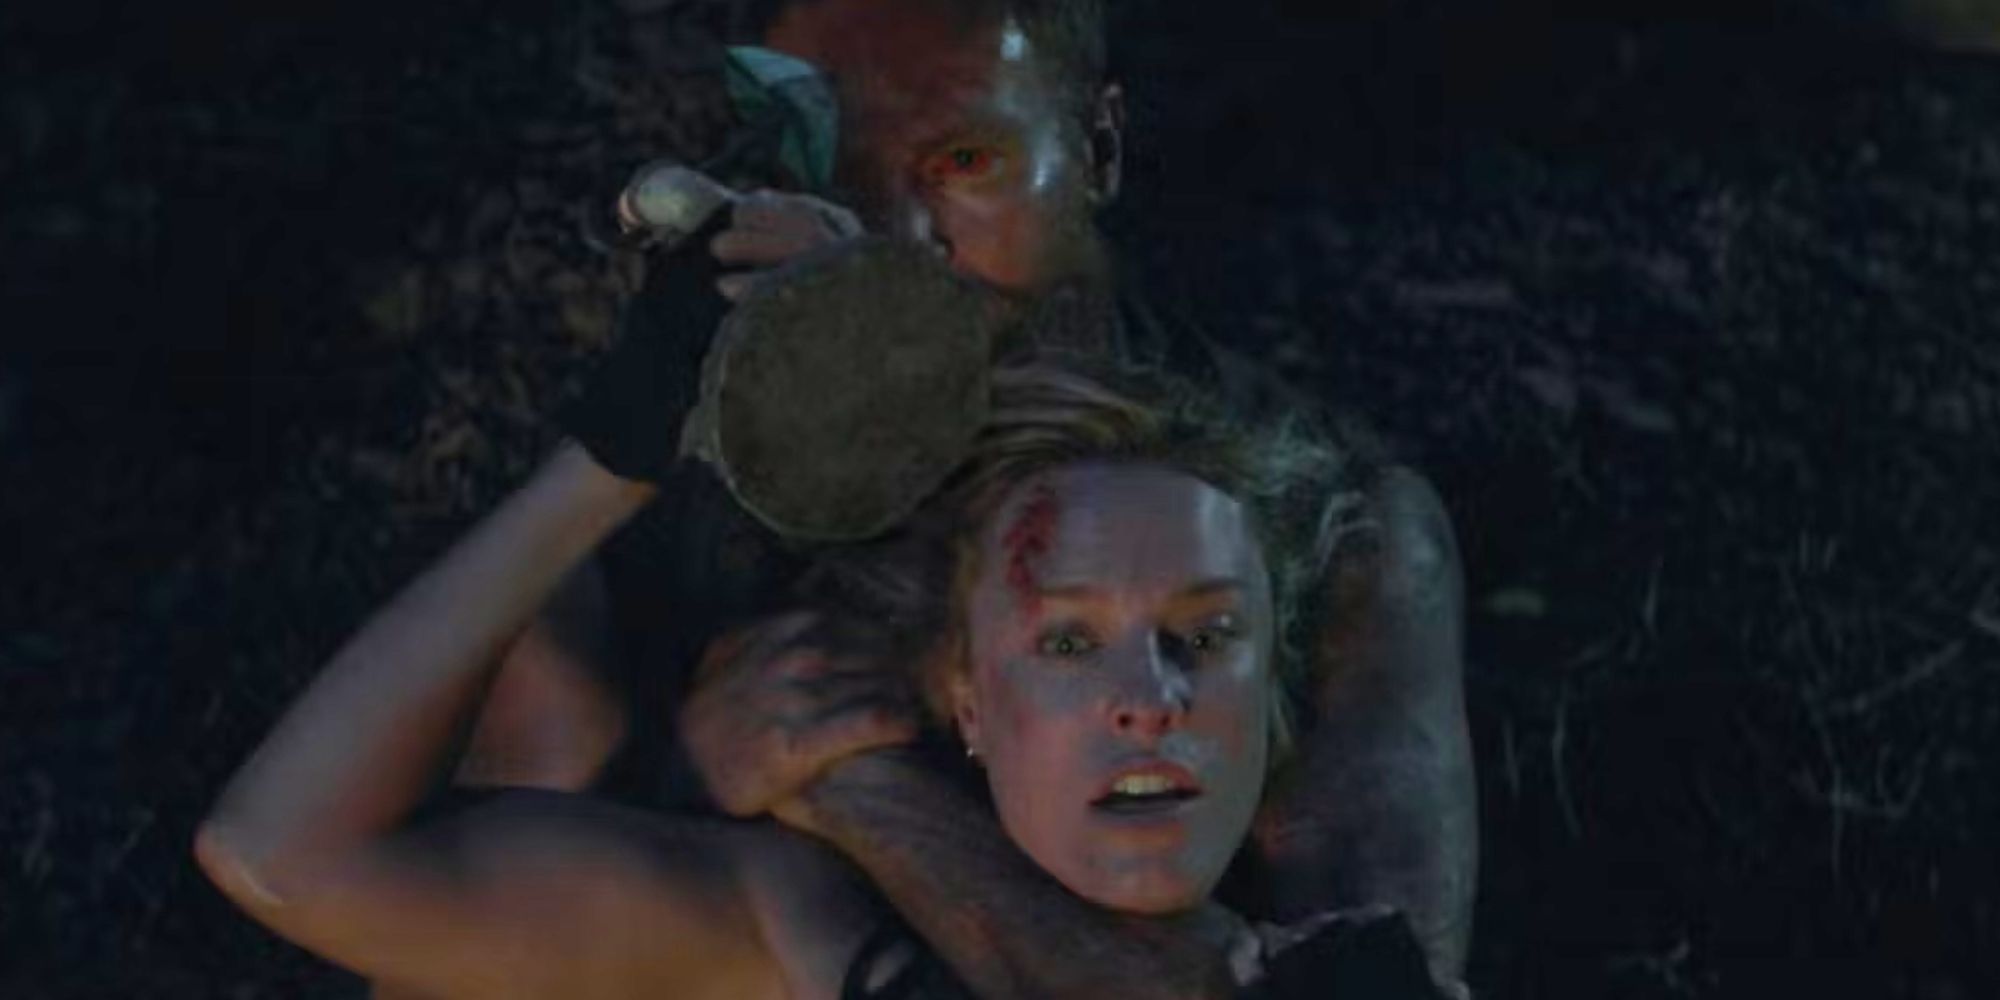 Jessica McNamee as Sonya Blade stabbing Josh Lawson as Kano in the eye in 2021's Mortal Kombat